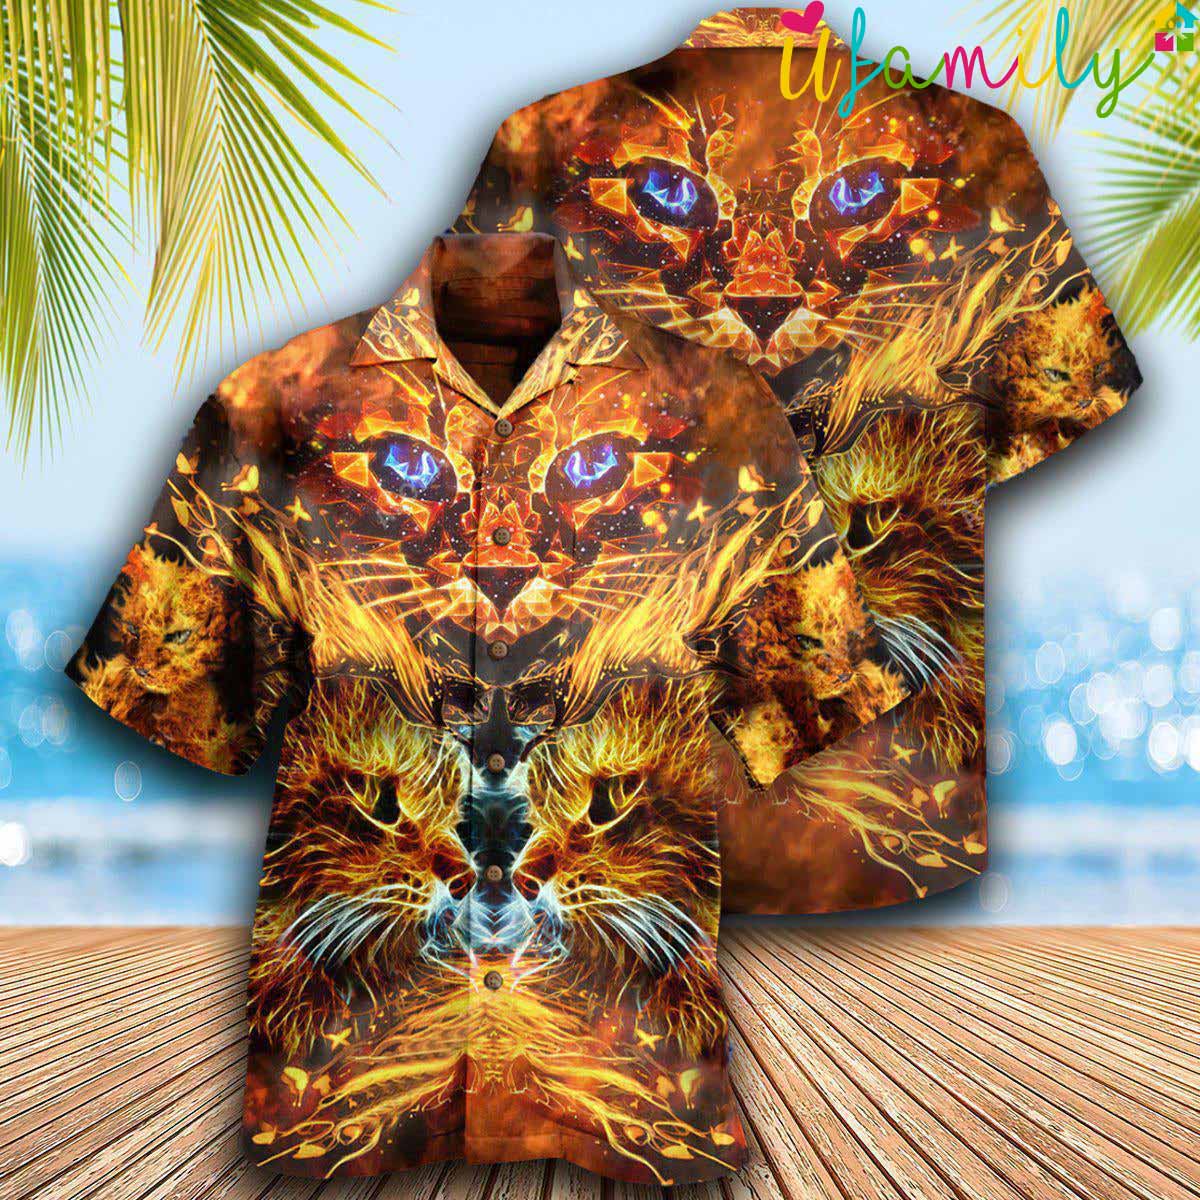 Cat Cool Flaming Hawaiian Shirt